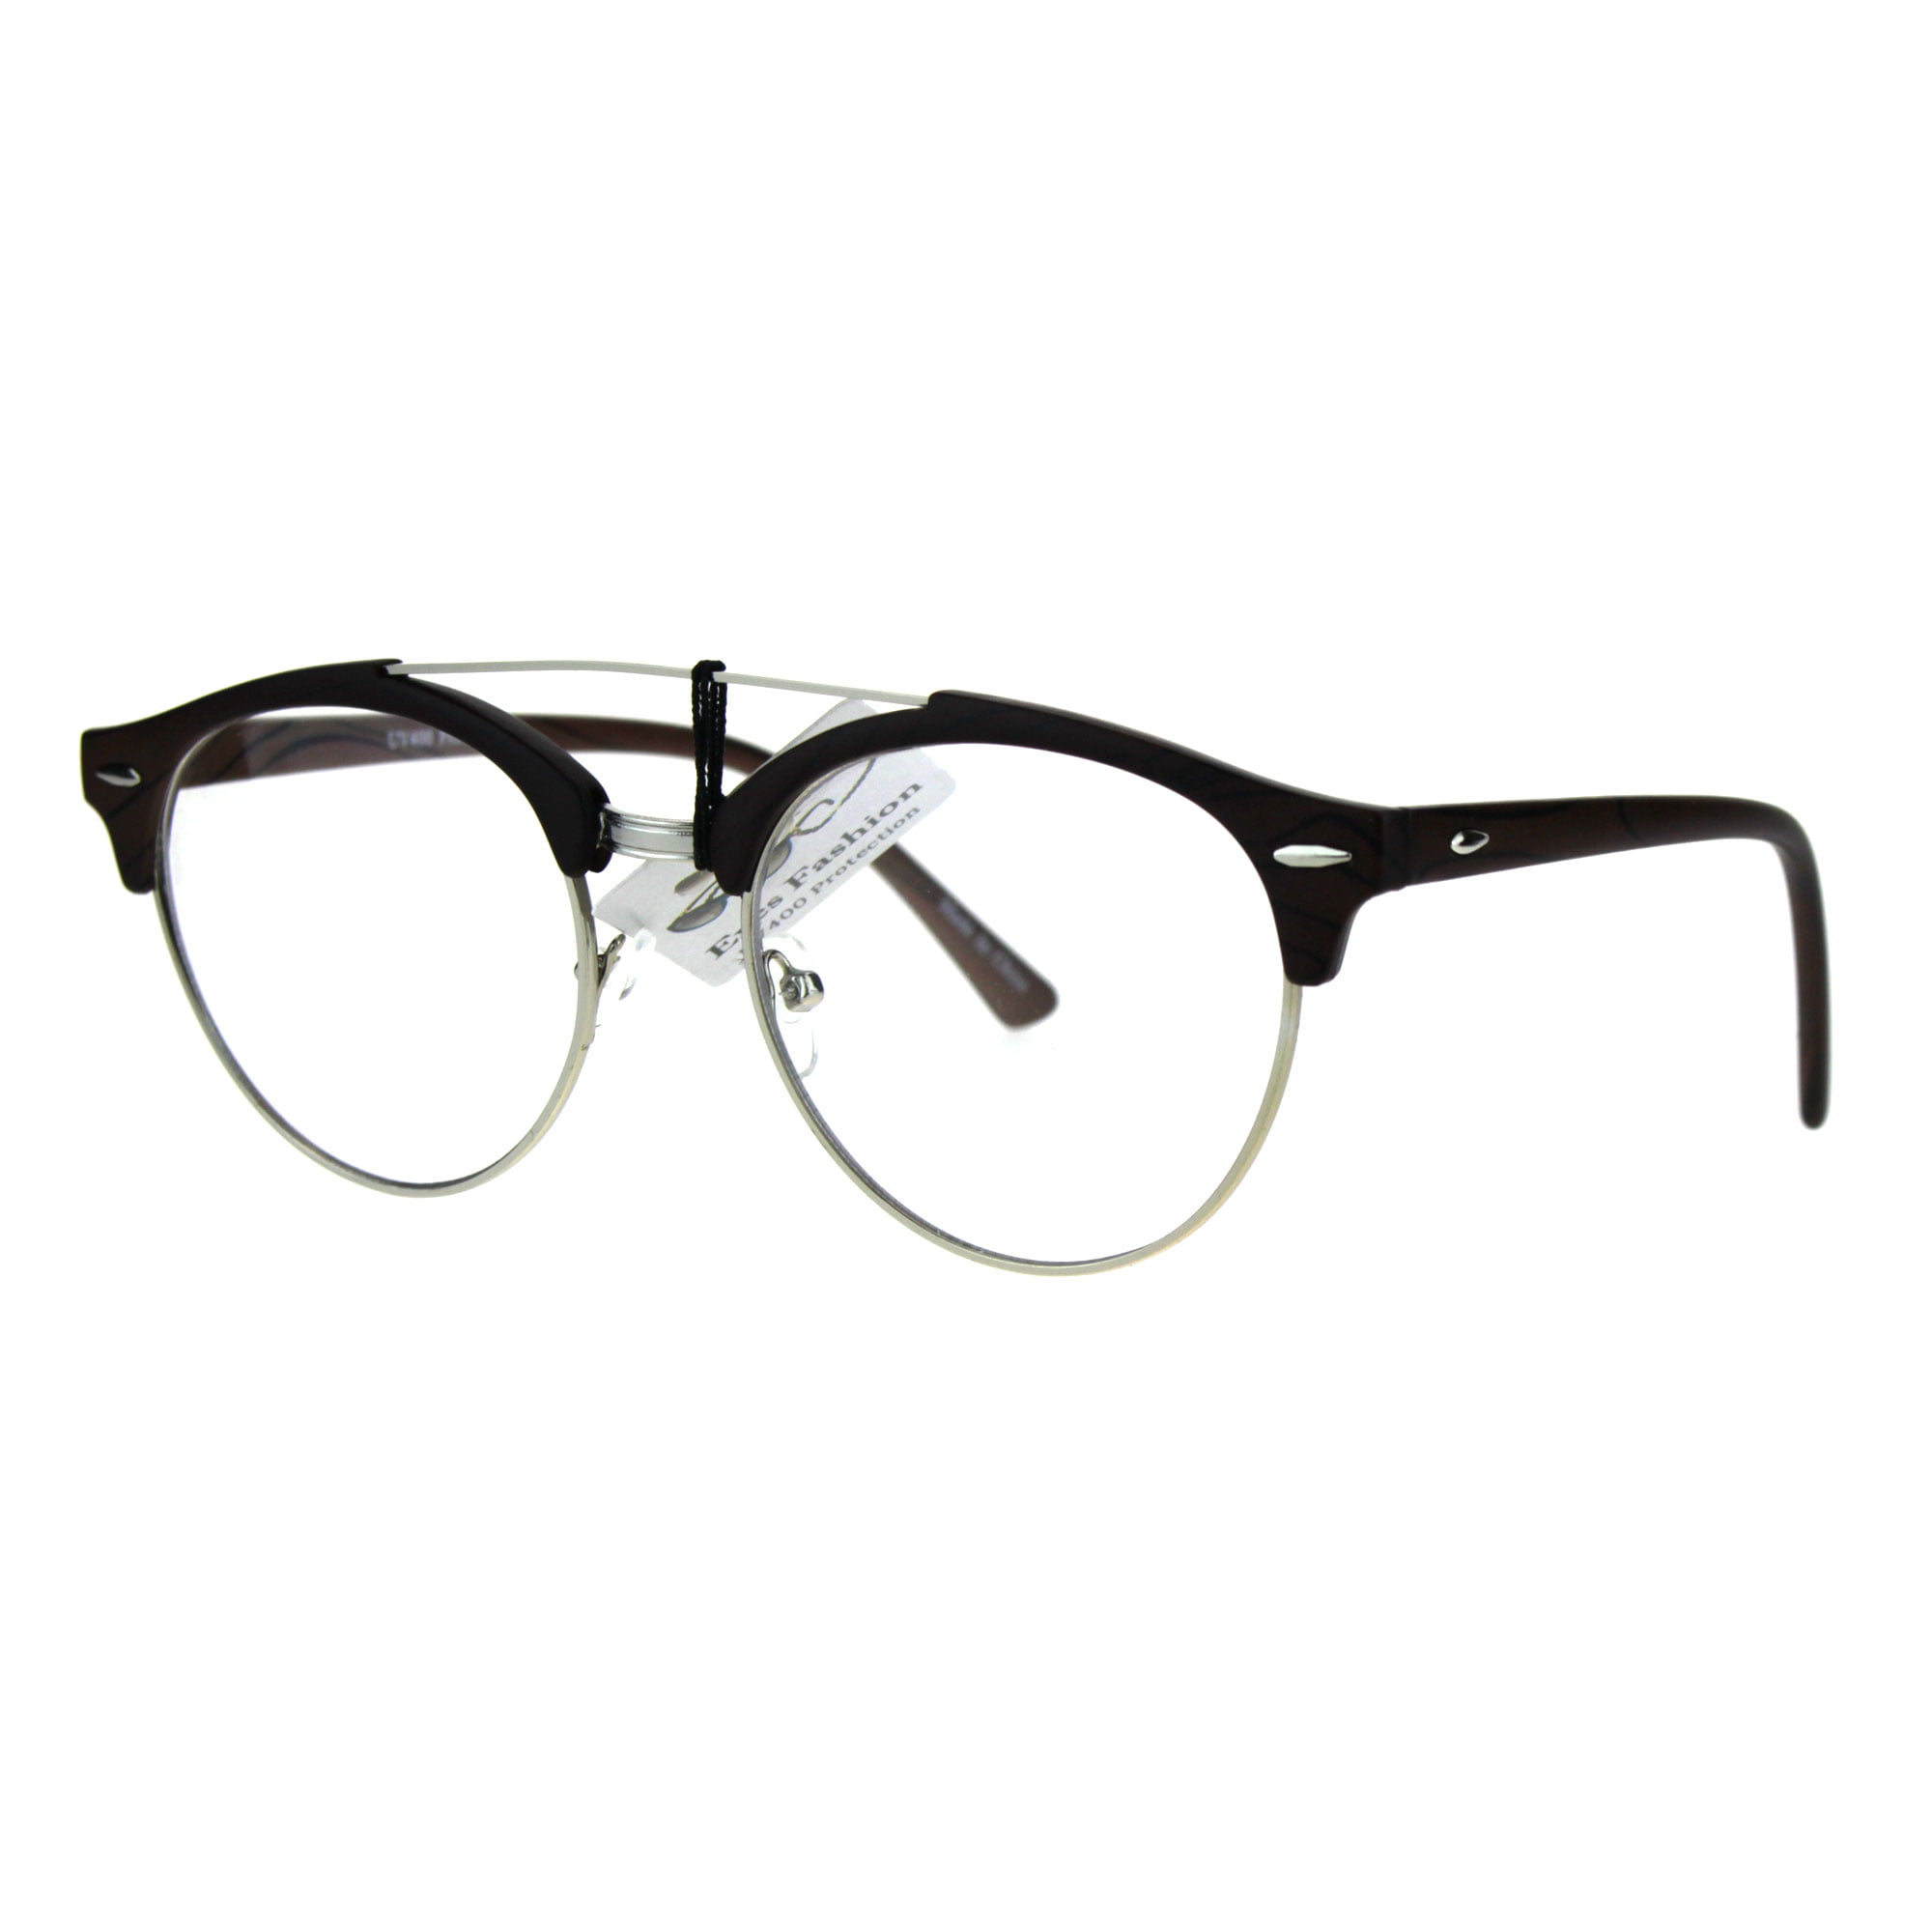 Black Fashion Cool Unisex Clear Lens Nerd Geek Glasses Eyewear For Men Womens Vintage 